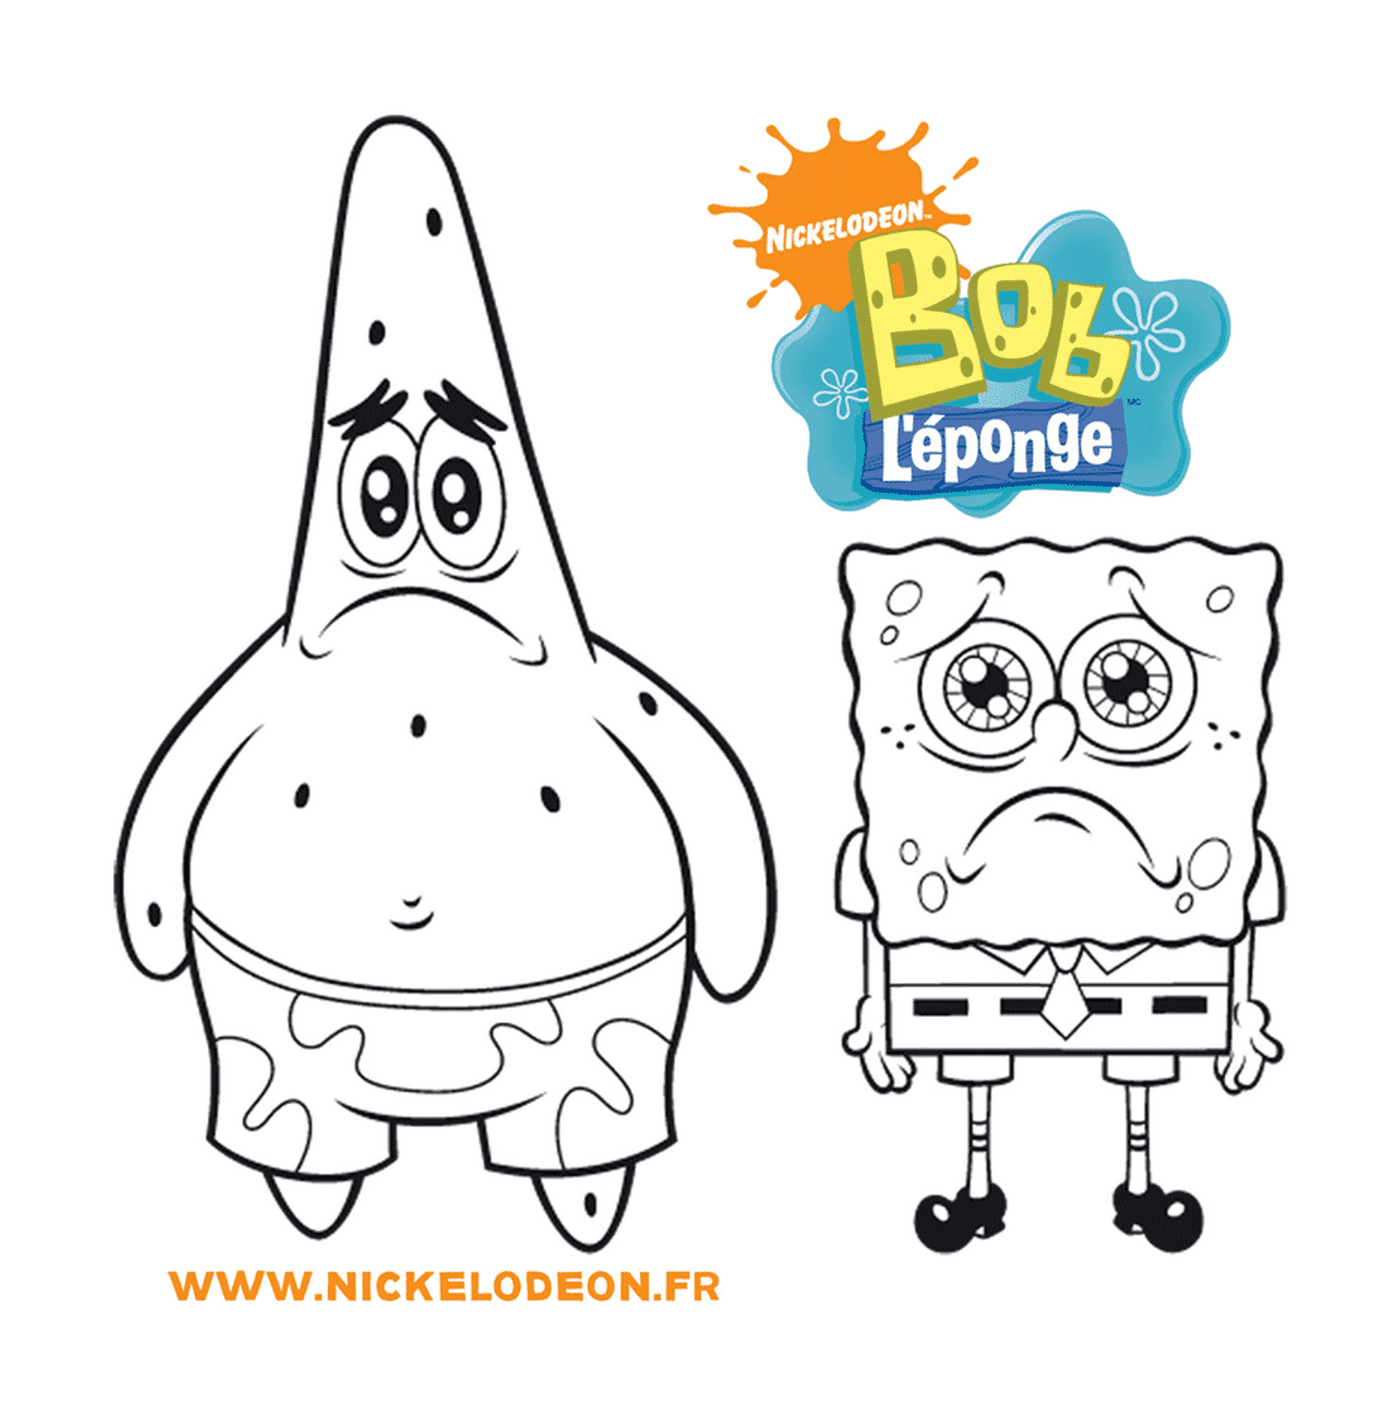  Ein Sponge Bob und das Sponge Bob Logo 